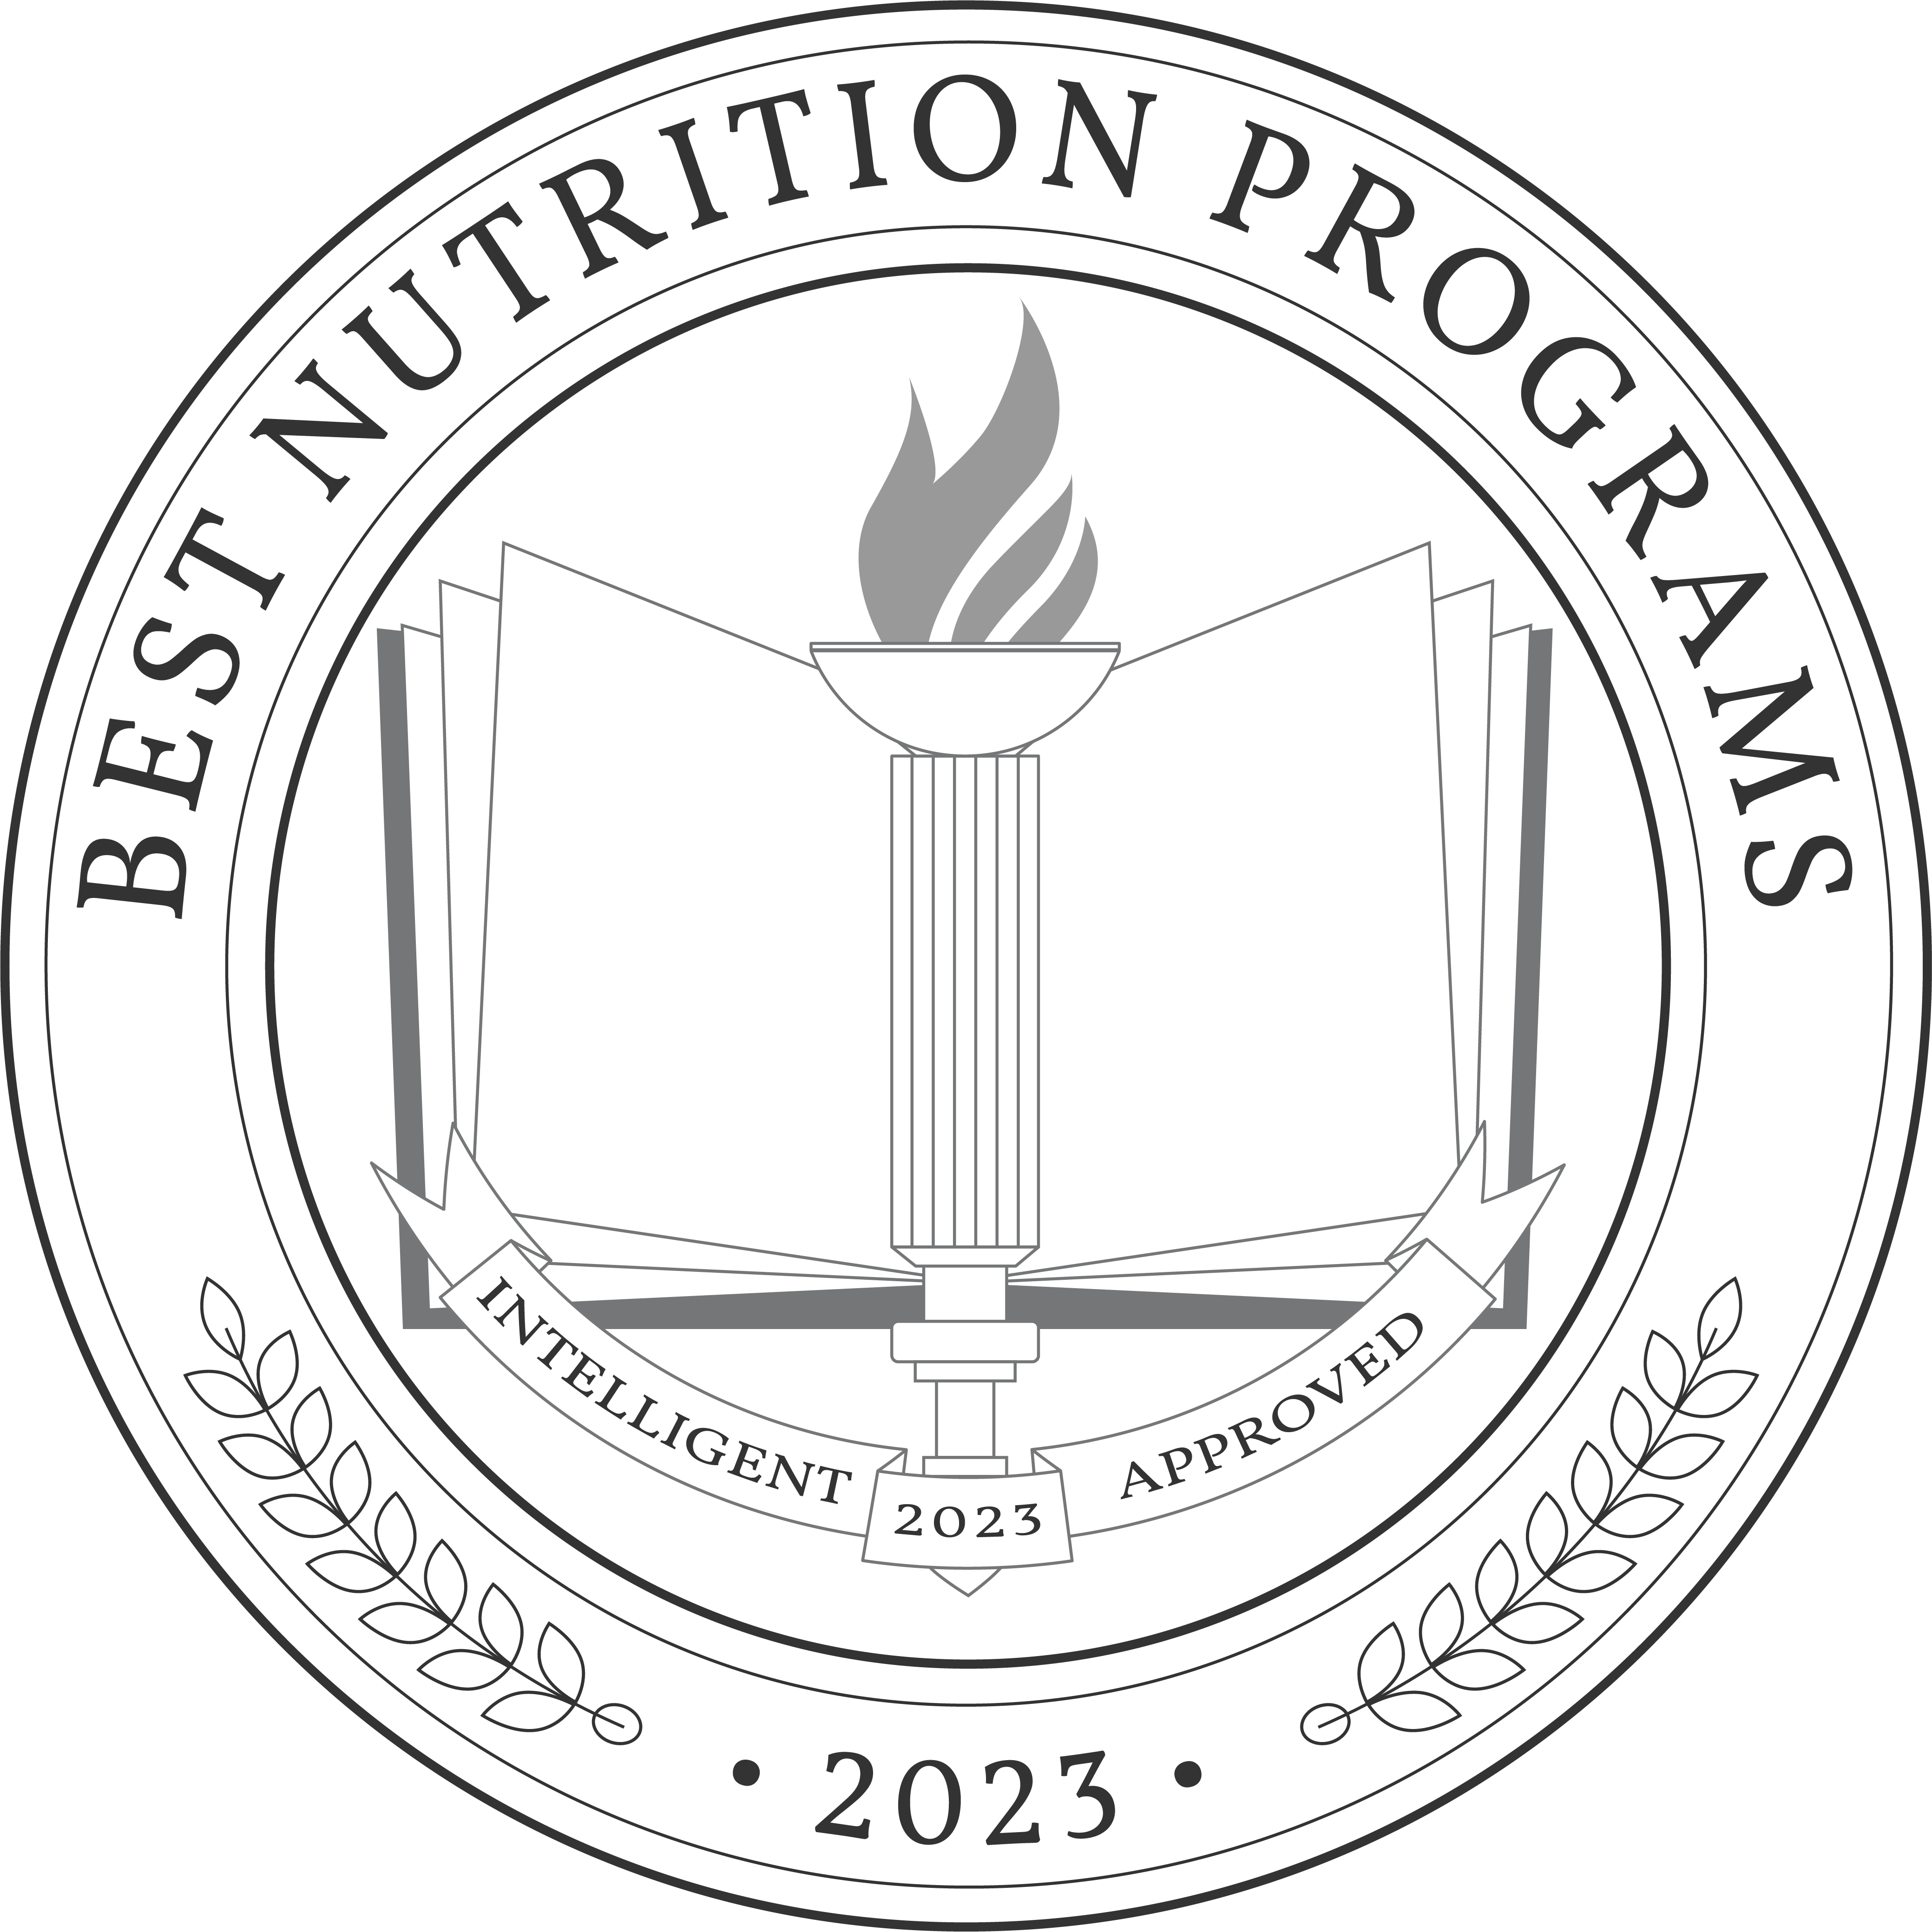 Best Nutrition Programs badge